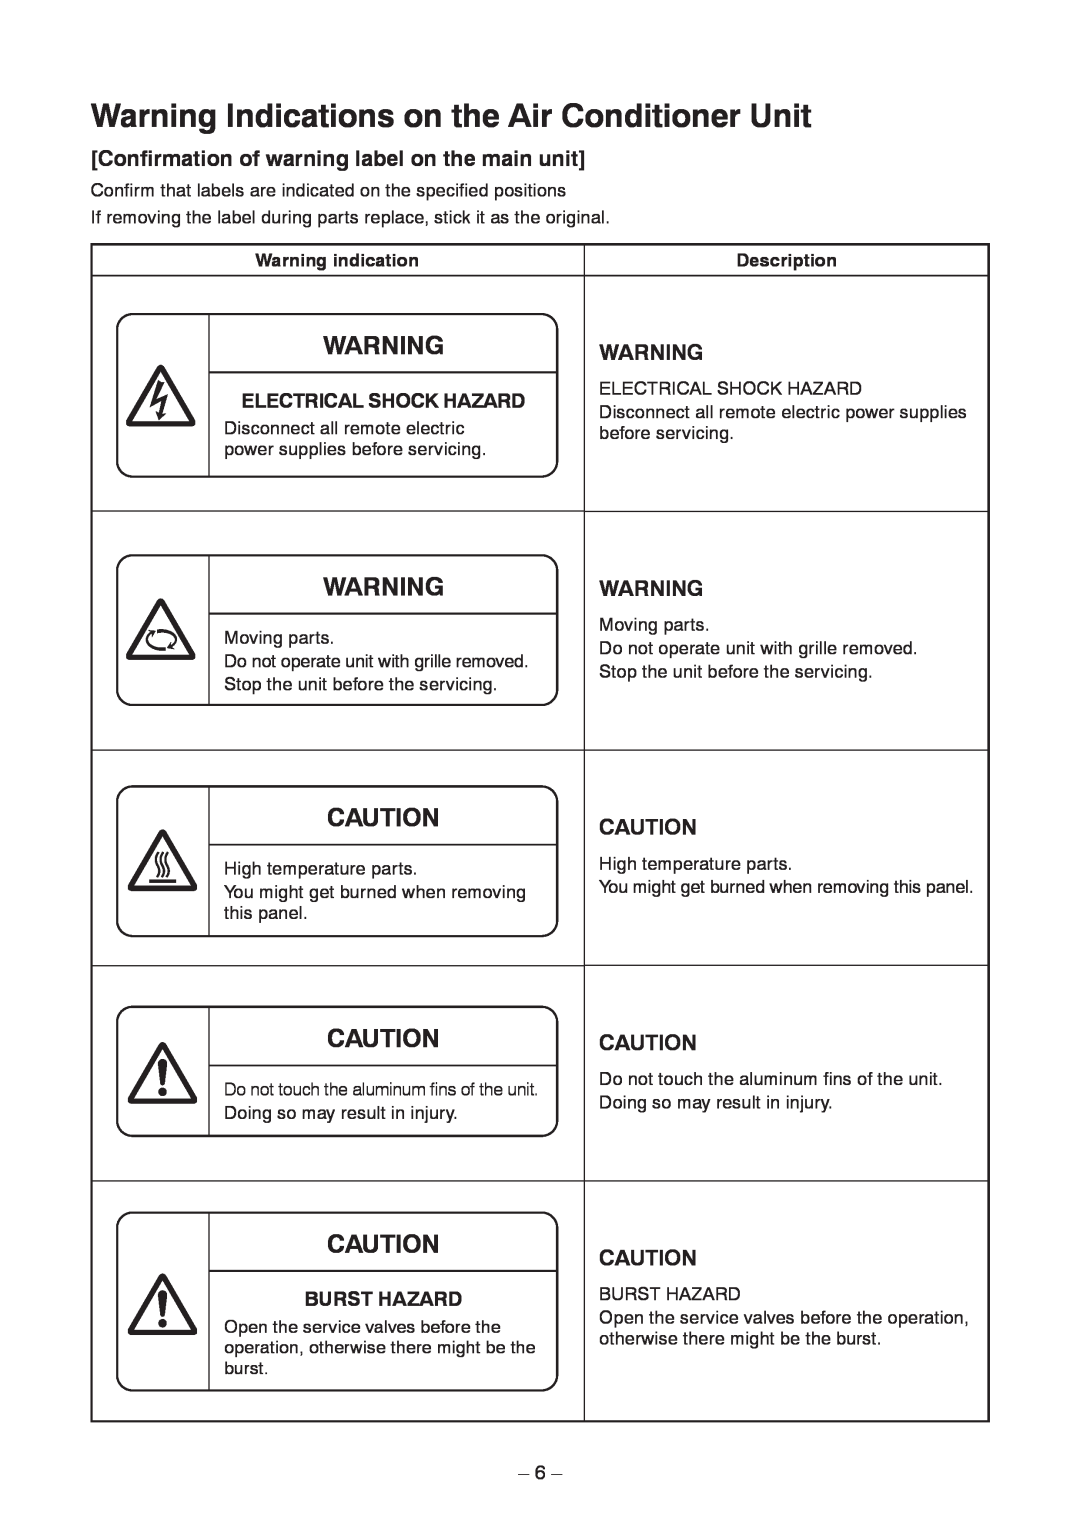 Toshiba CEILING TYPE Warning Indications on the Air Conditioner Unit, Burst Hazard, 6, Warning indication, Description 